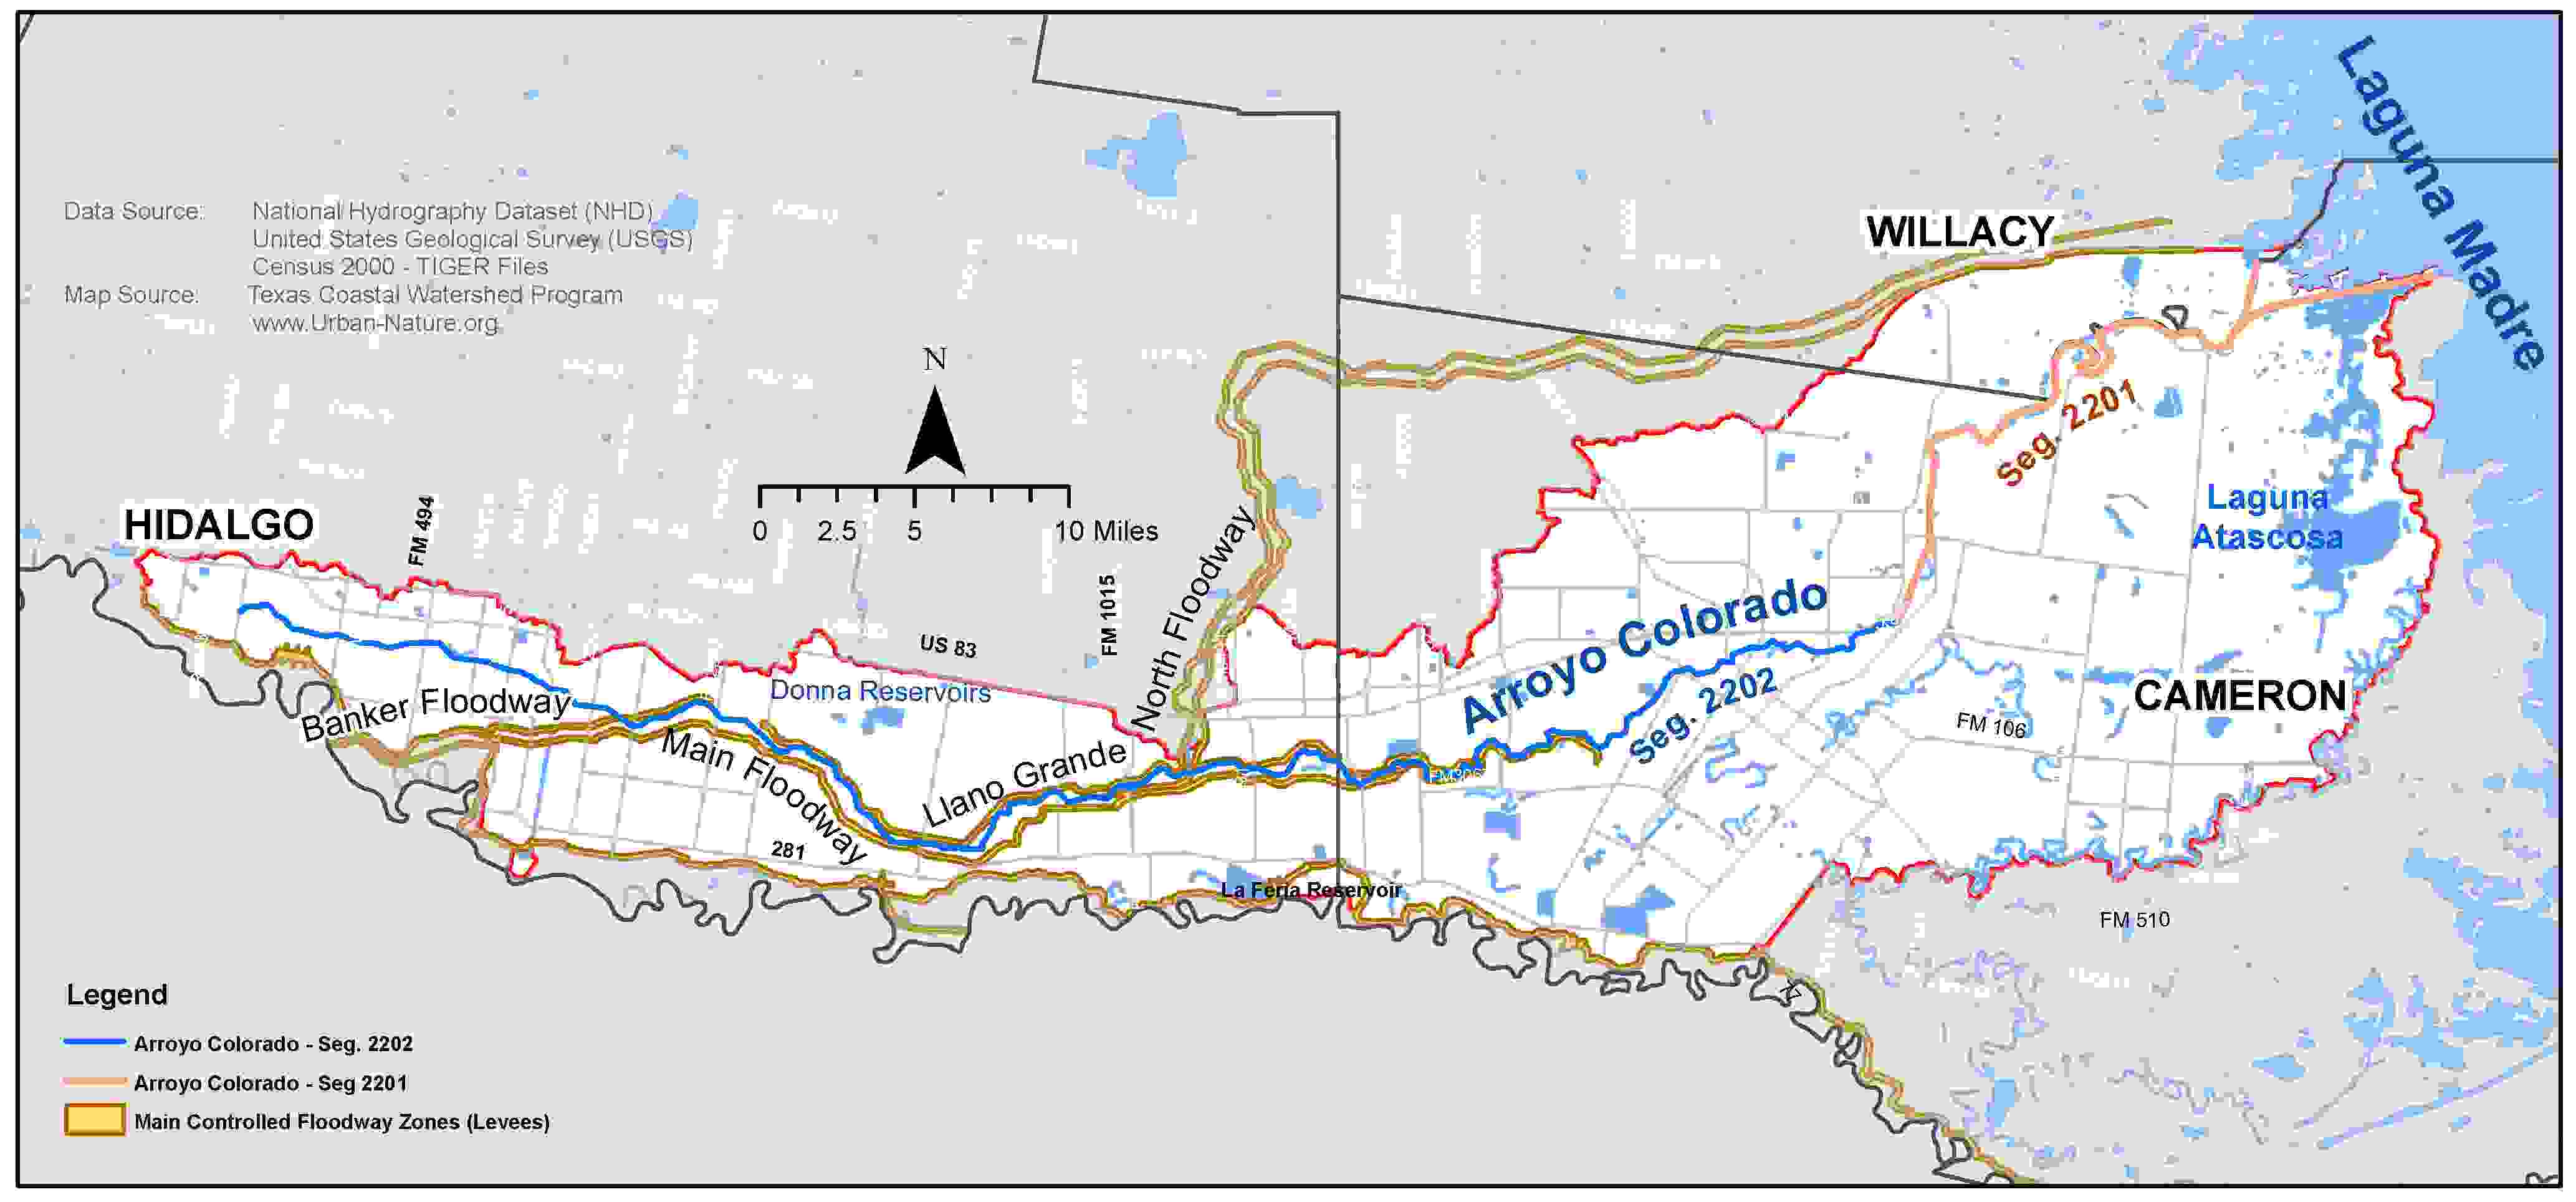 Figure 2.1. Hydrologic map of the Arroyo Colorado showing floodway systems (Arroyo Colorado WPP 2007)